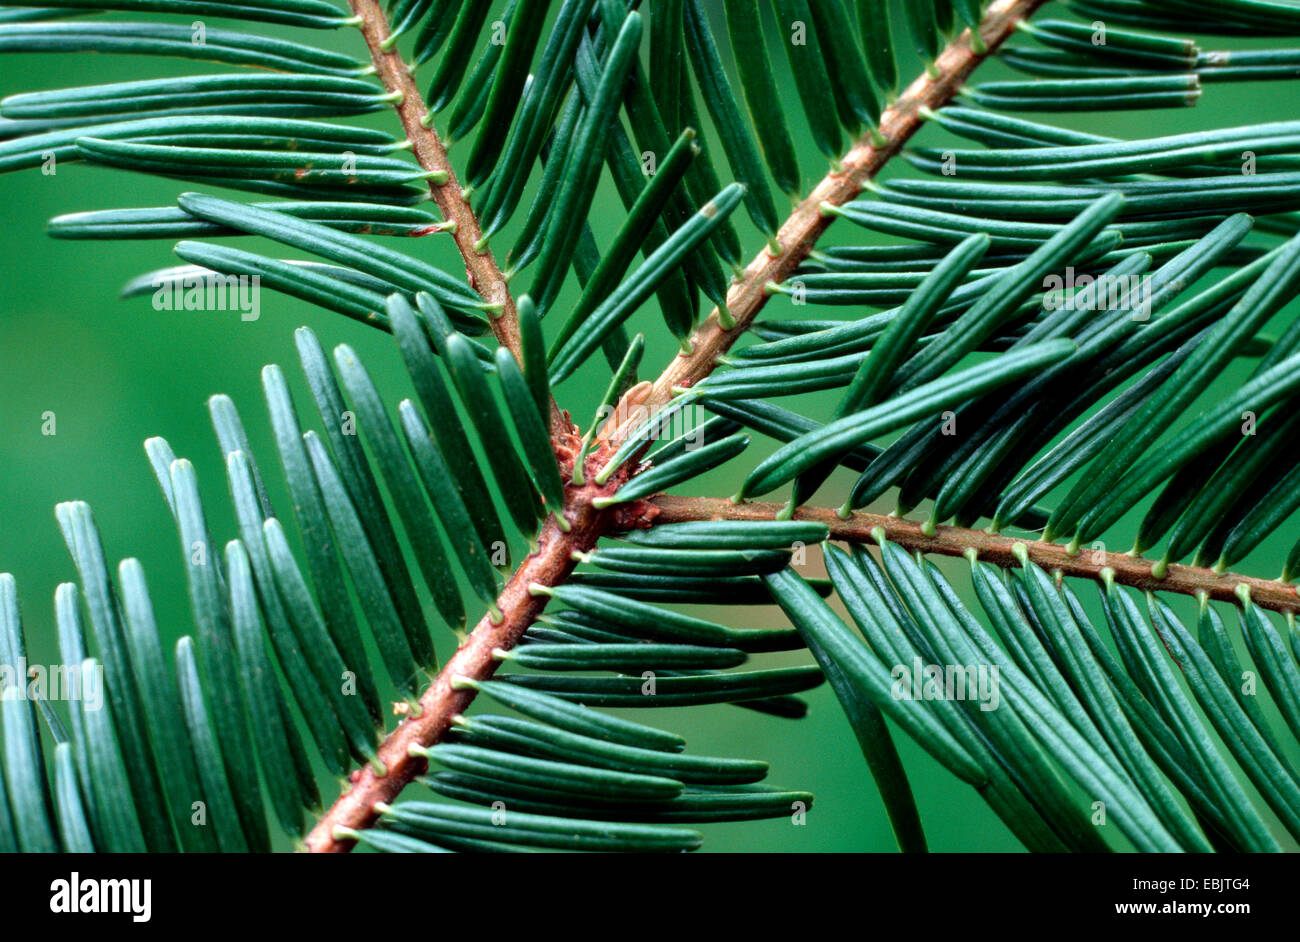 European silver fir (Abies alba), branch, Germany Stock Photo